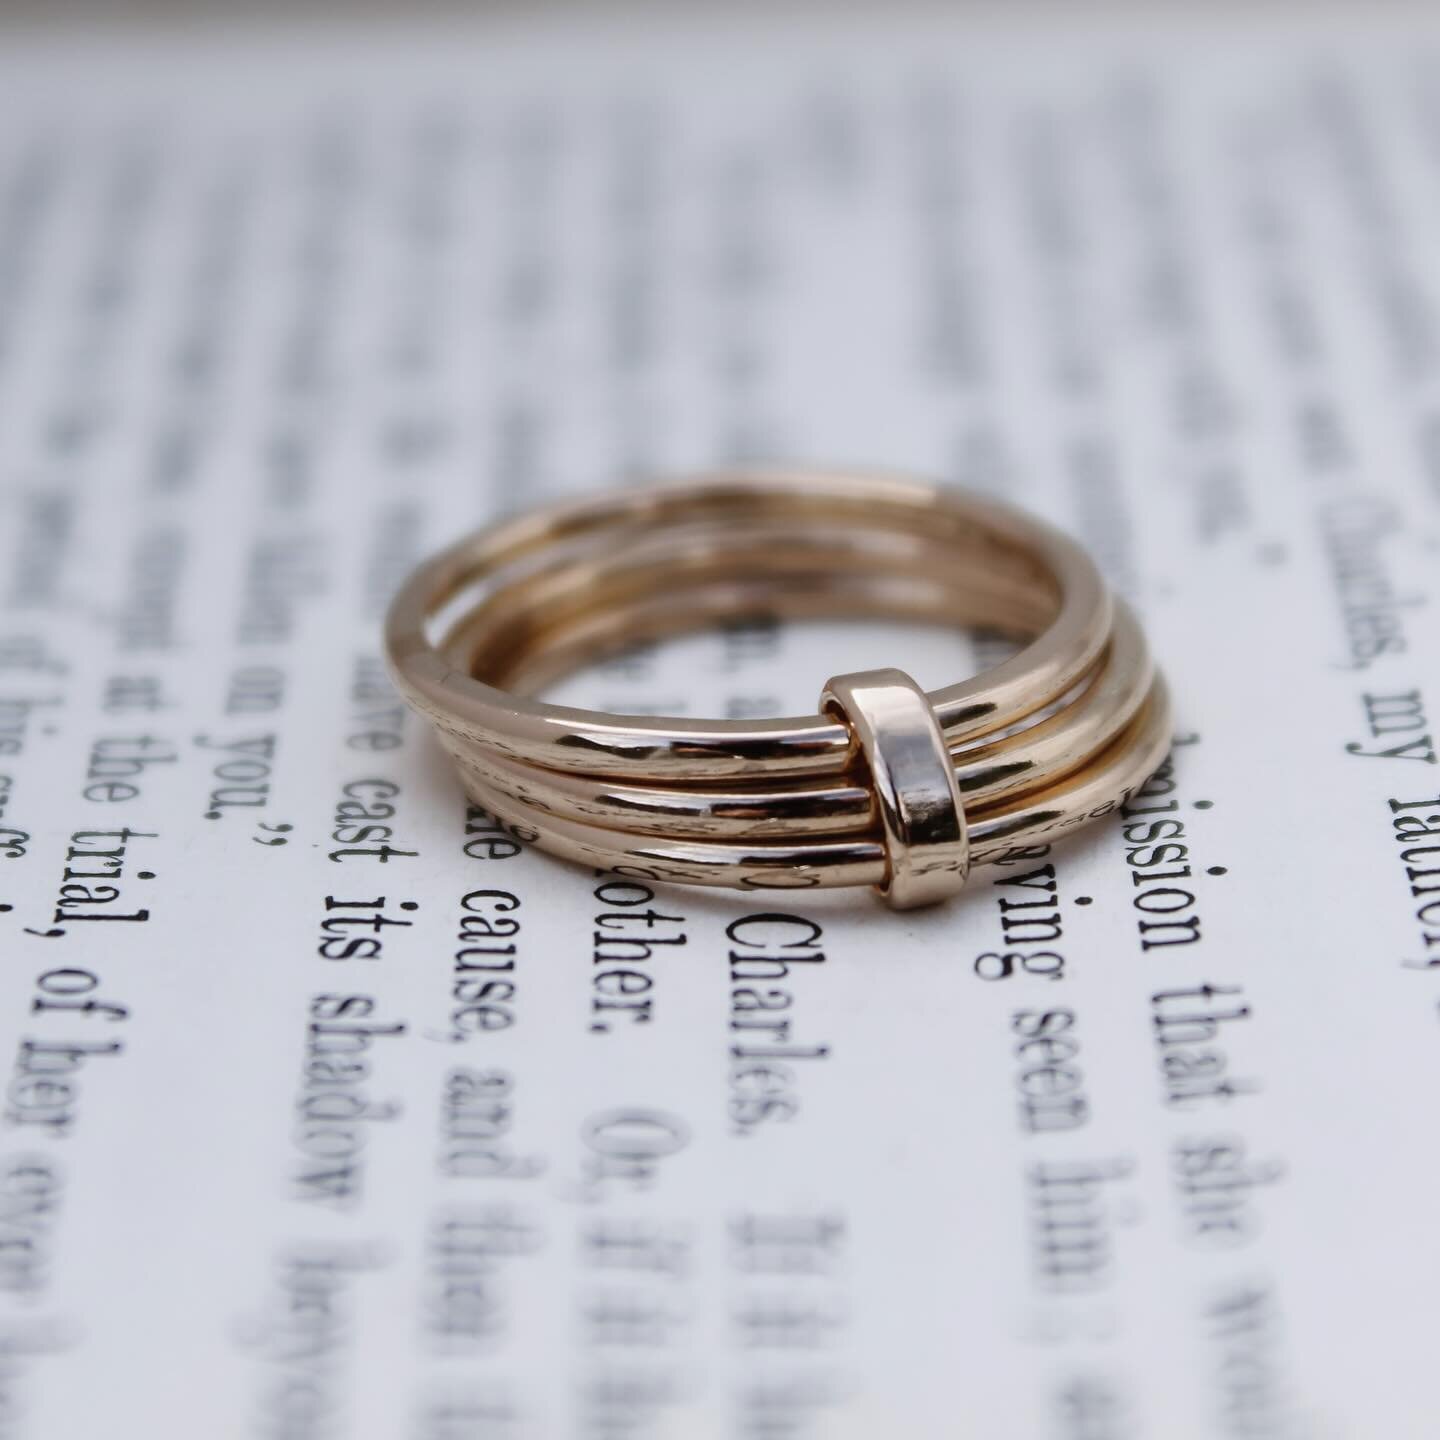 The perfect ring for fidgety fingers 💛.
.
#jewelleryremodel #recycledgold #ethicaljewellery #ethicalfashion #sustainability #bristoljeweller #goldrings